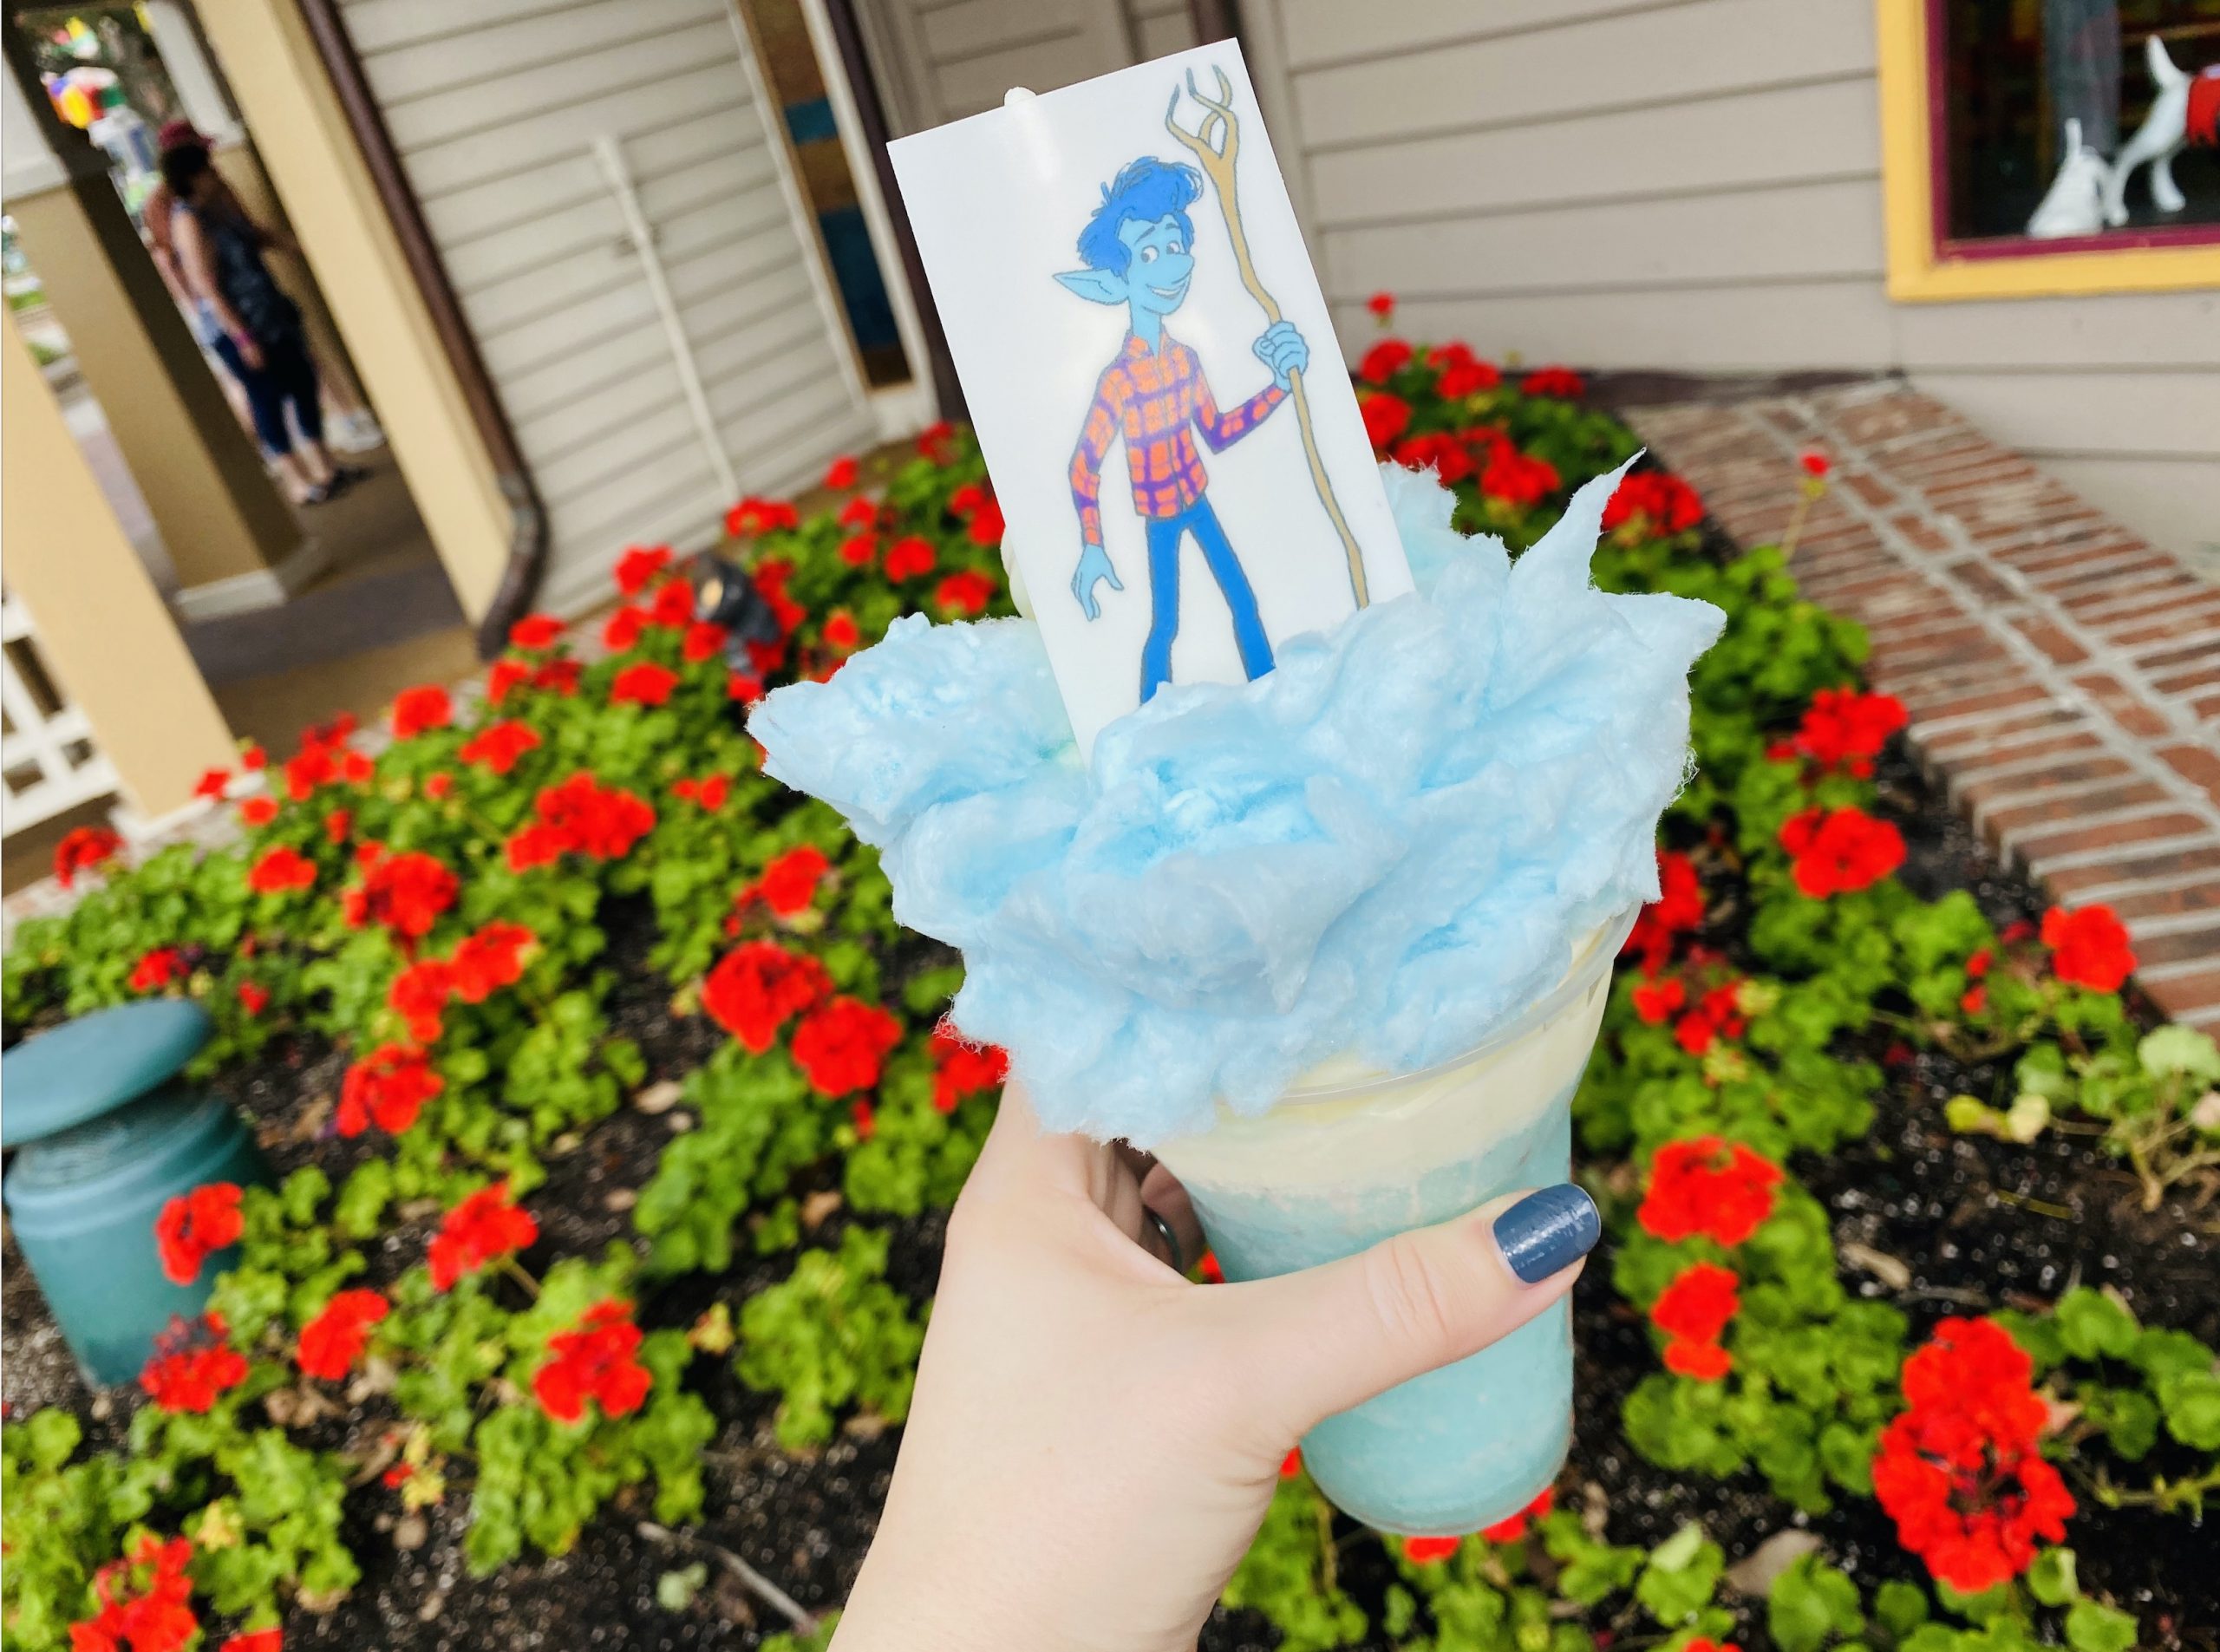 New “Onward” Cotton Candy Lemonade Soft Serve At Walt Disney World!